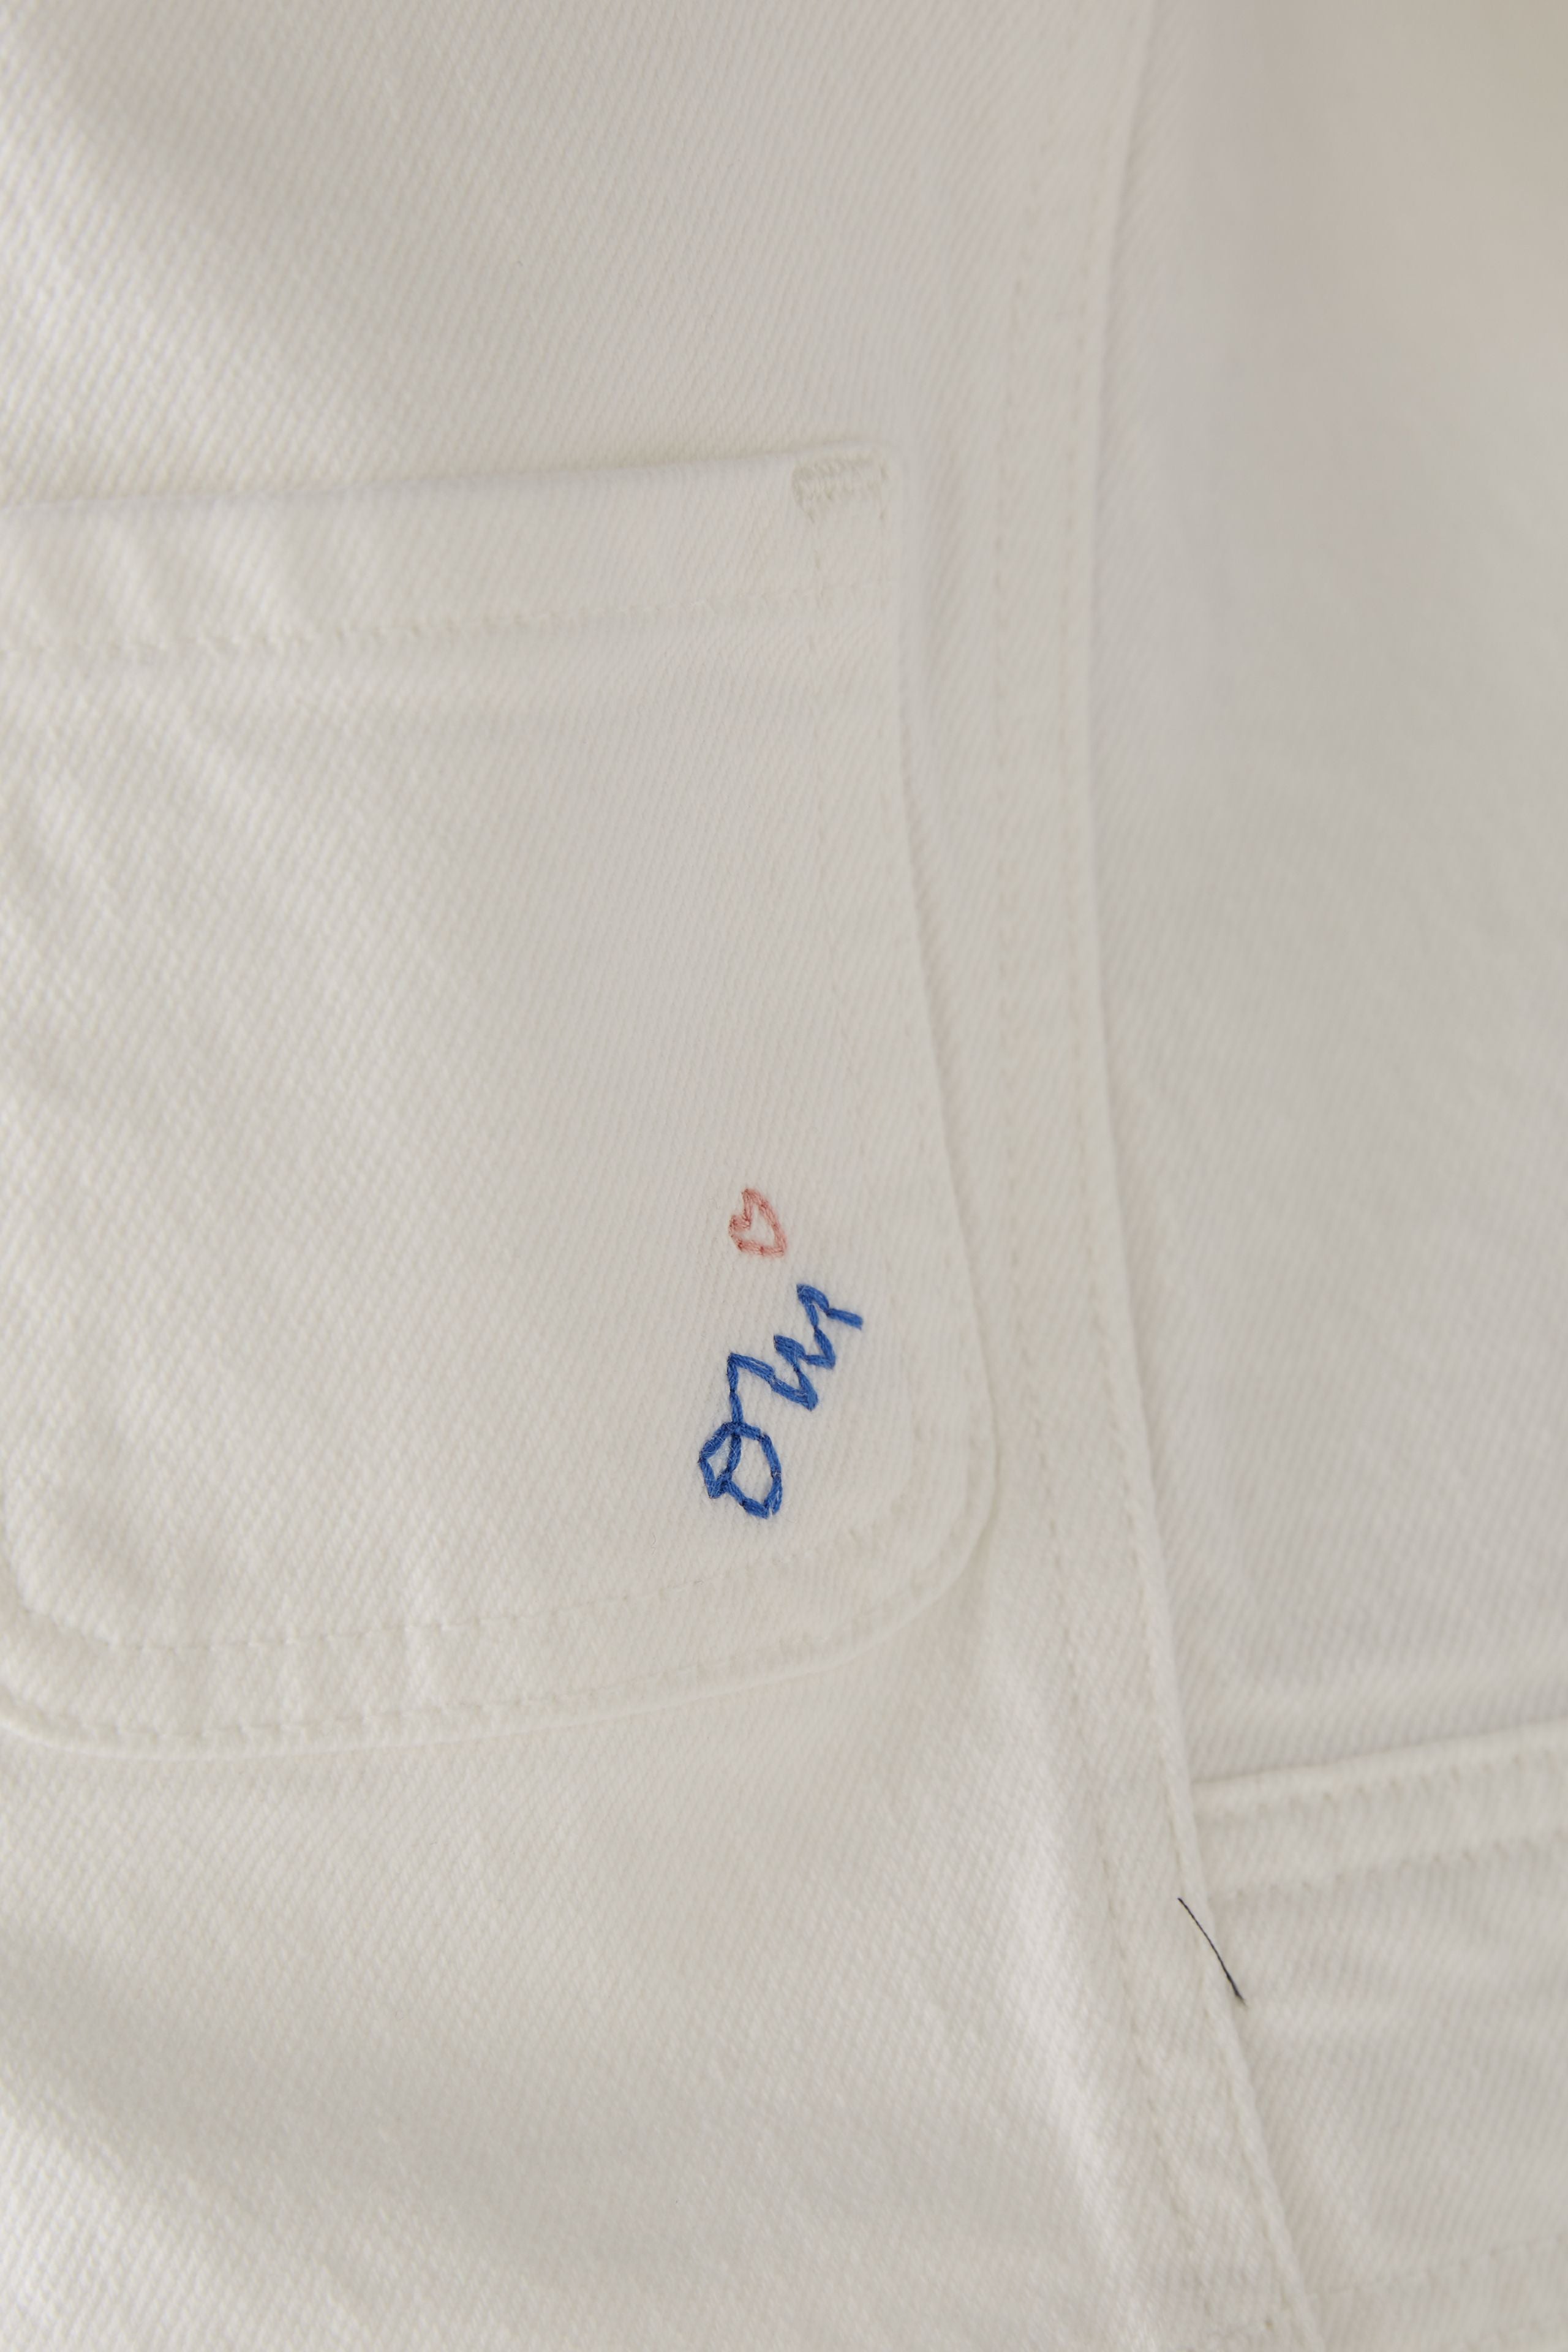 Oui White Embroidered Denim jacket